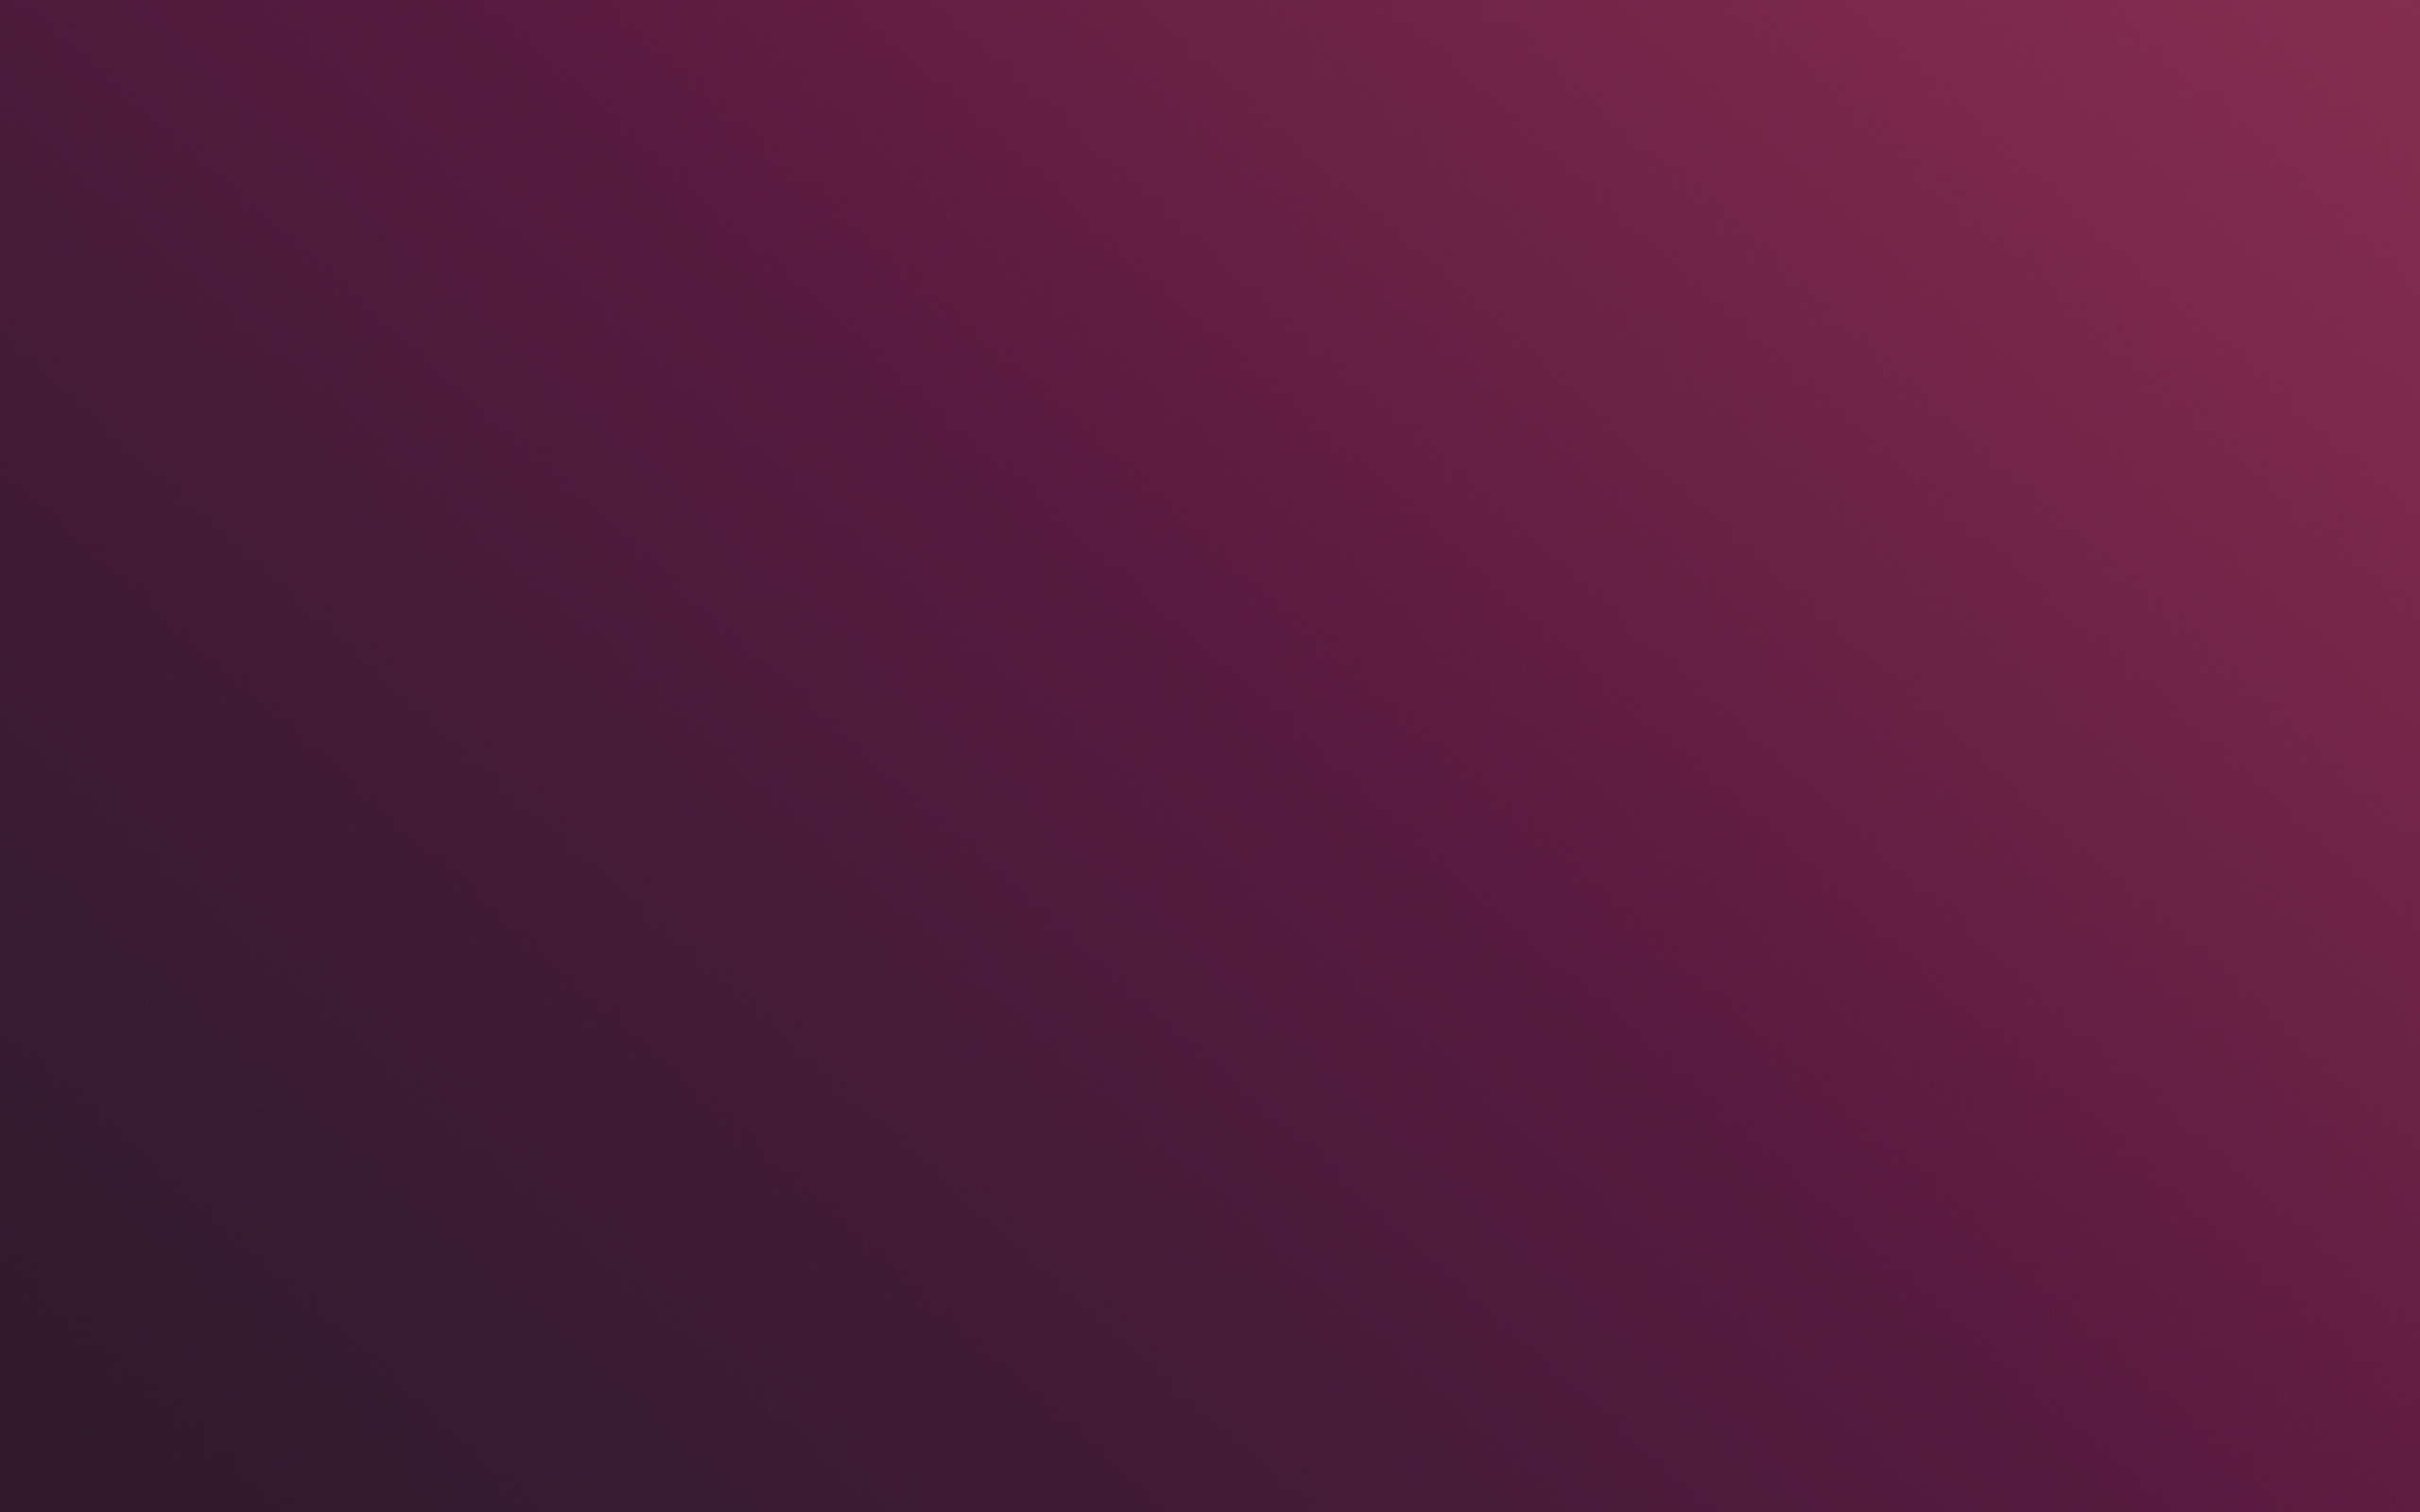 Das Ubuntu Wallpaper 2560x1600